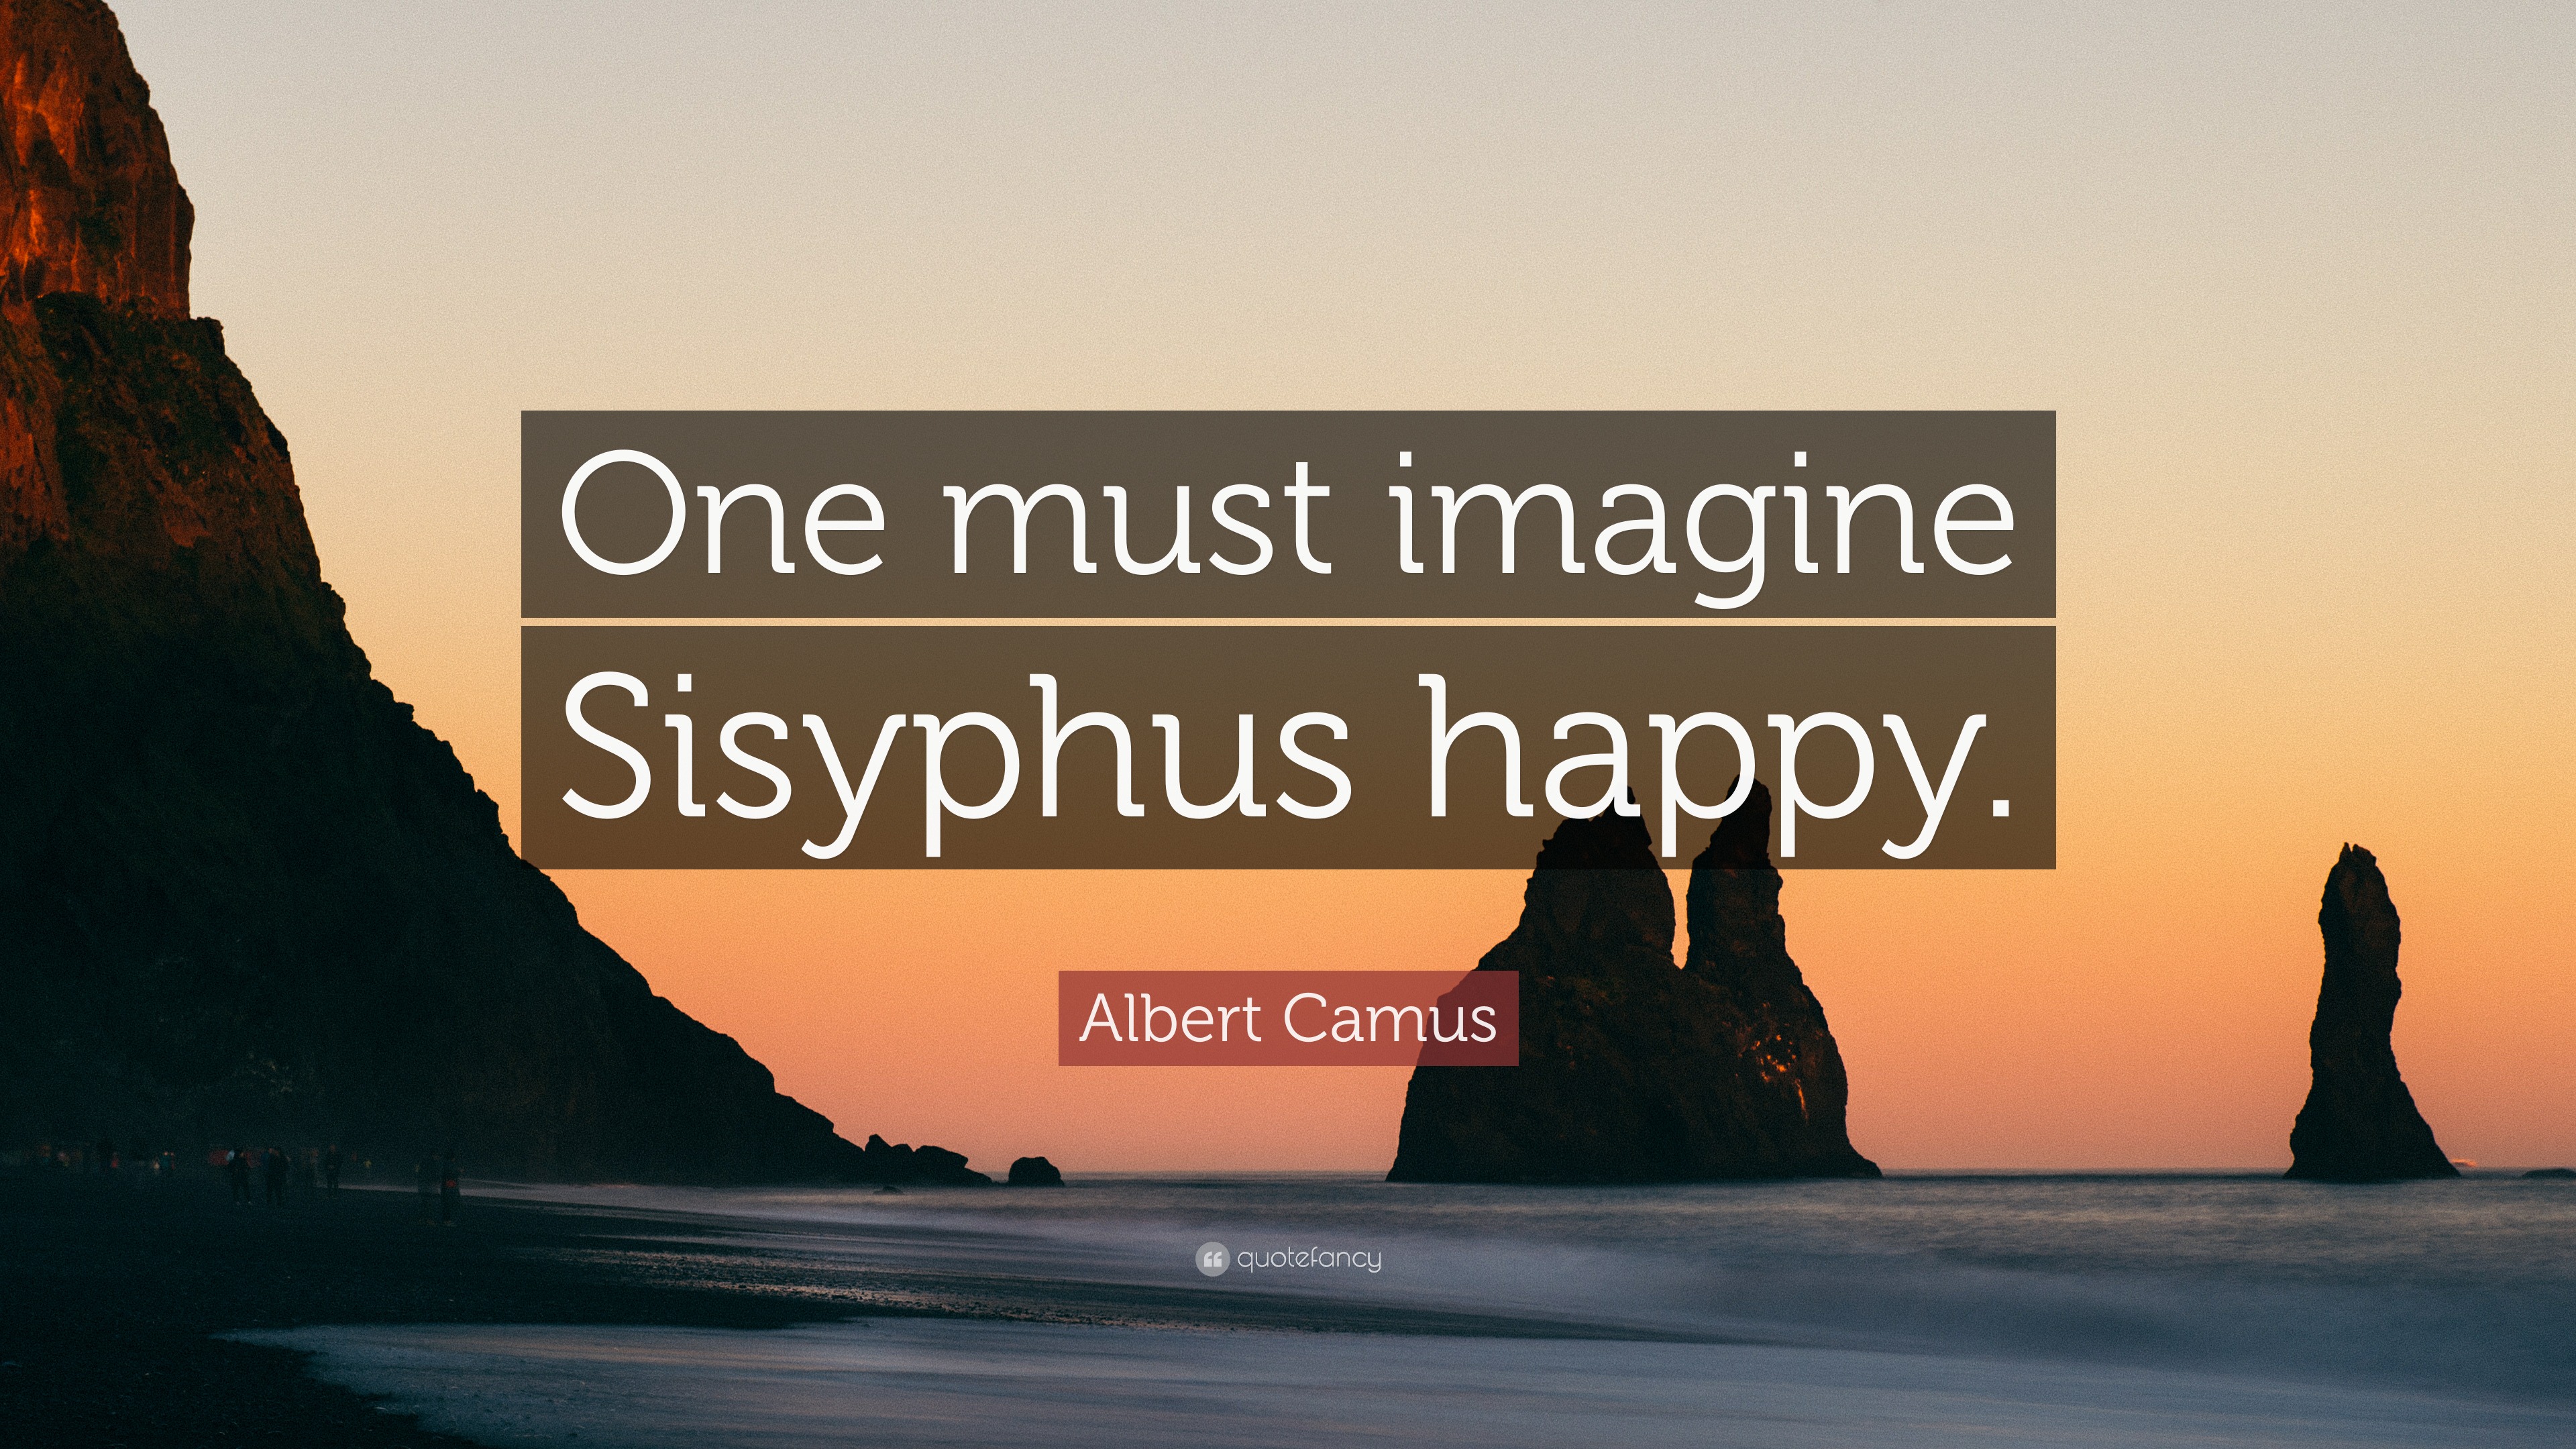 we must imagine sisyphus happy